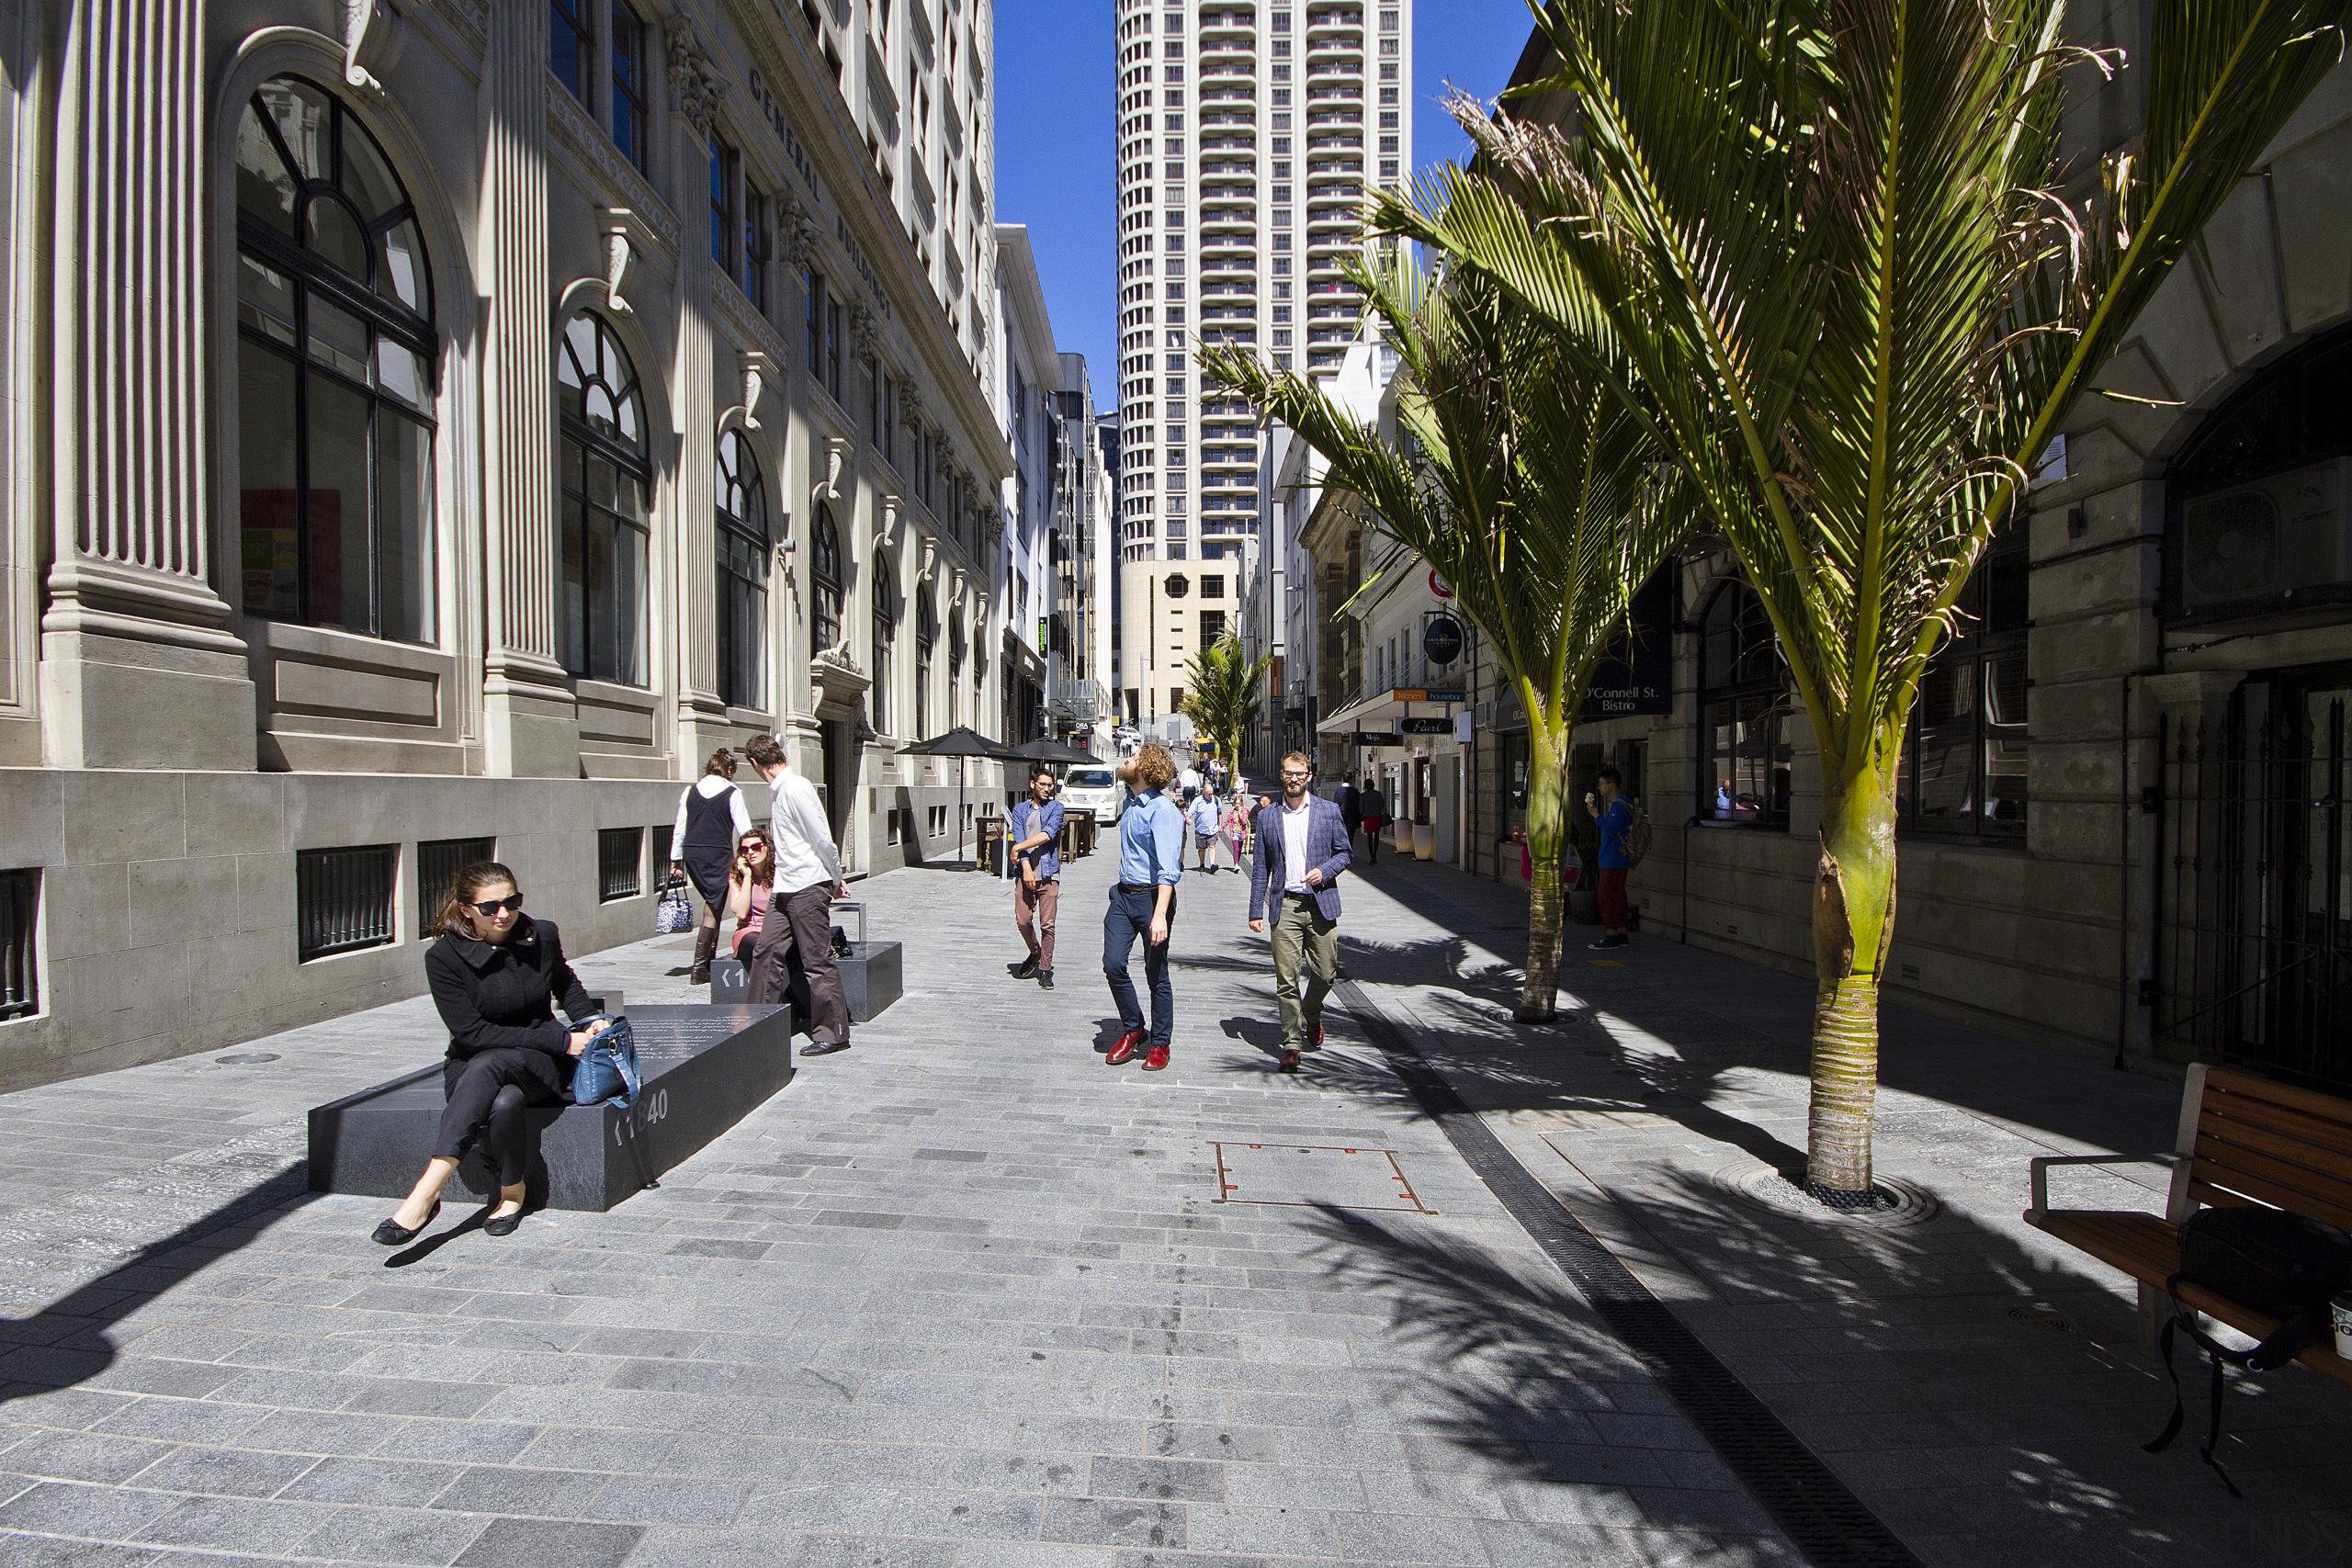 The OConnell Street shared space in the Auckland alley, asphalt, city, downtown, infrastructure, lane, neighbourhood, pedestrian, road, sidewalk, street, town, urban area, black, gray